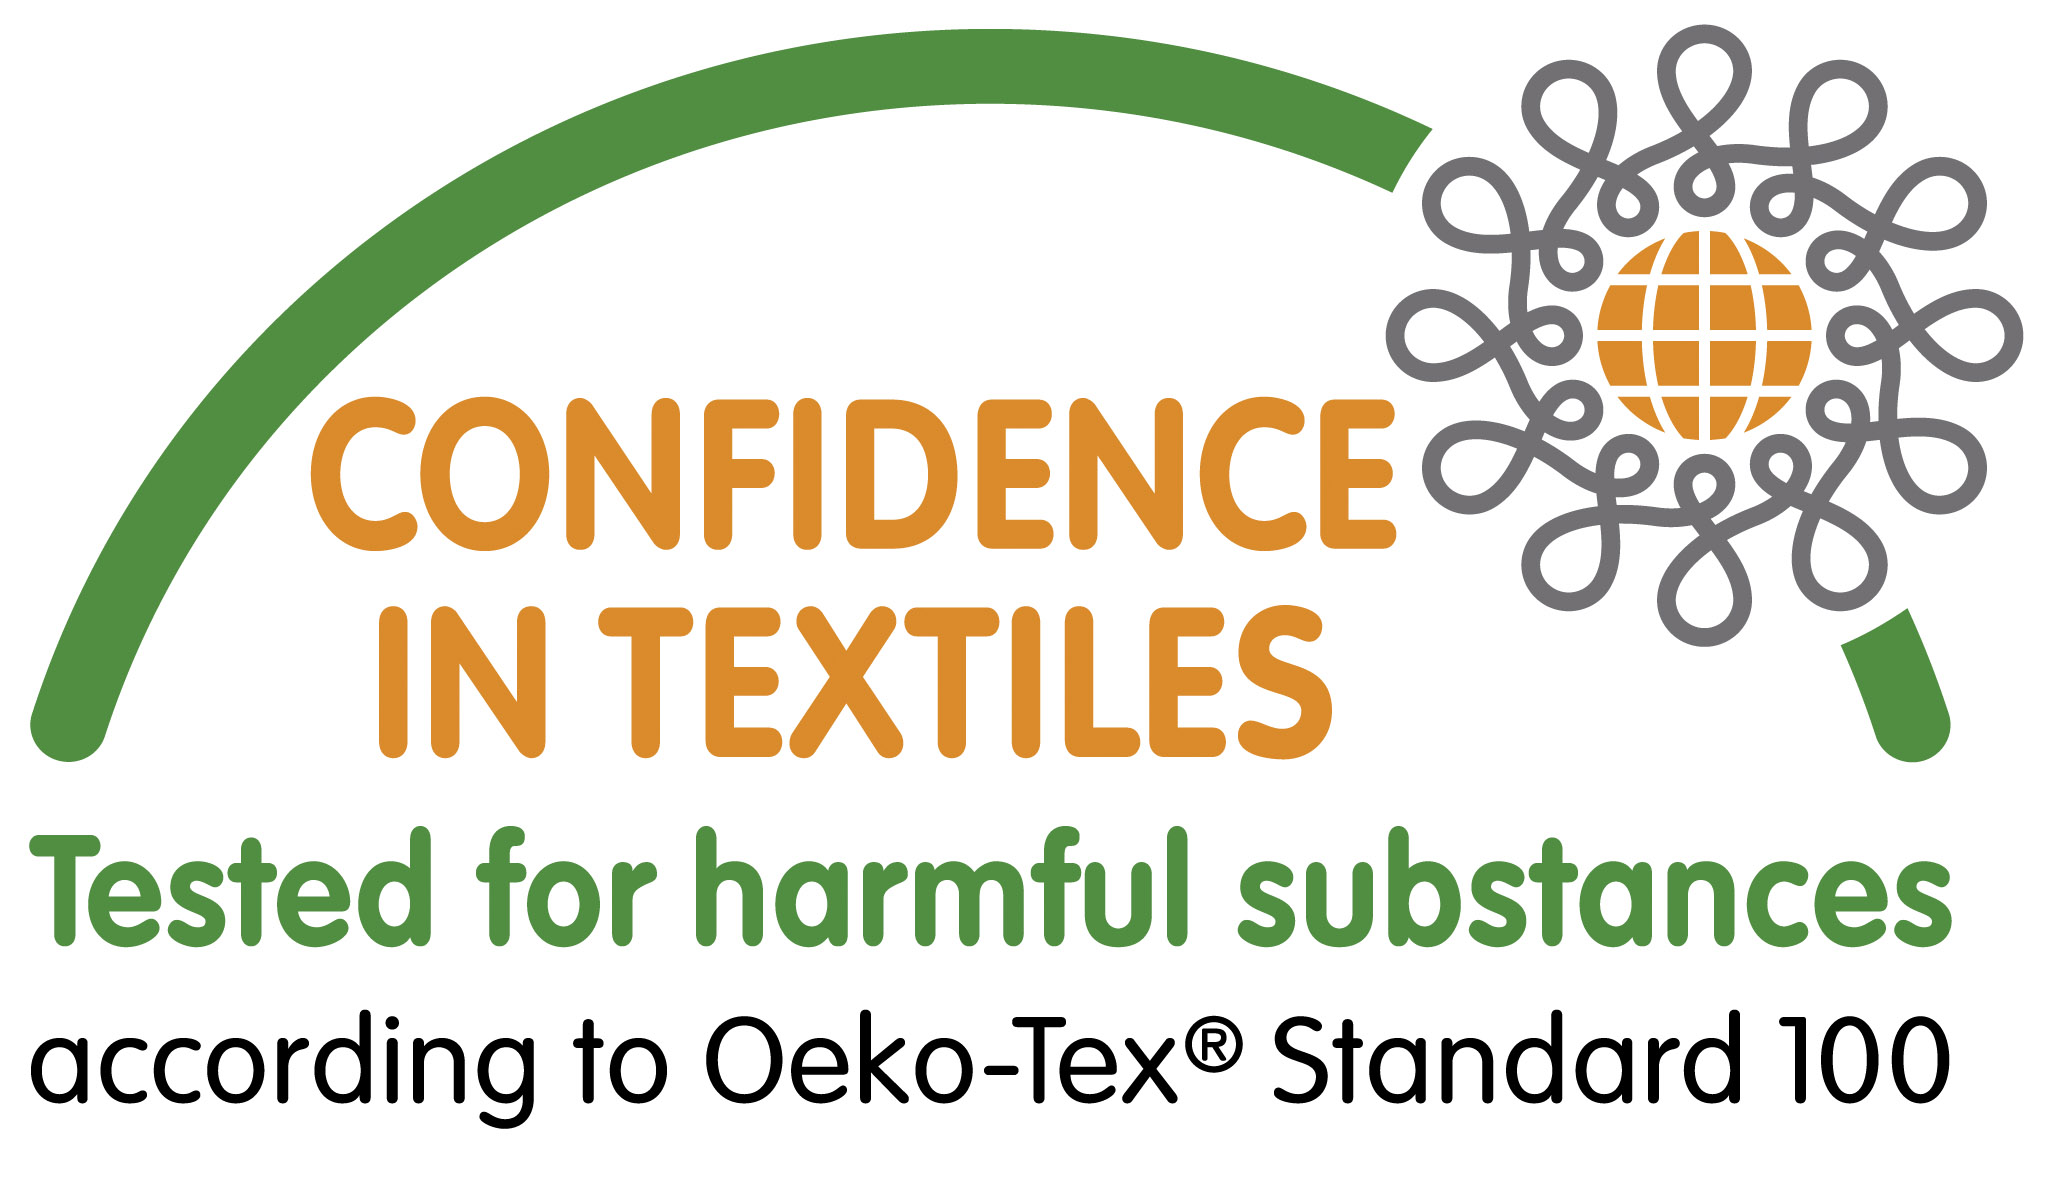 Oeko-tex certificate verification: Quality assurance